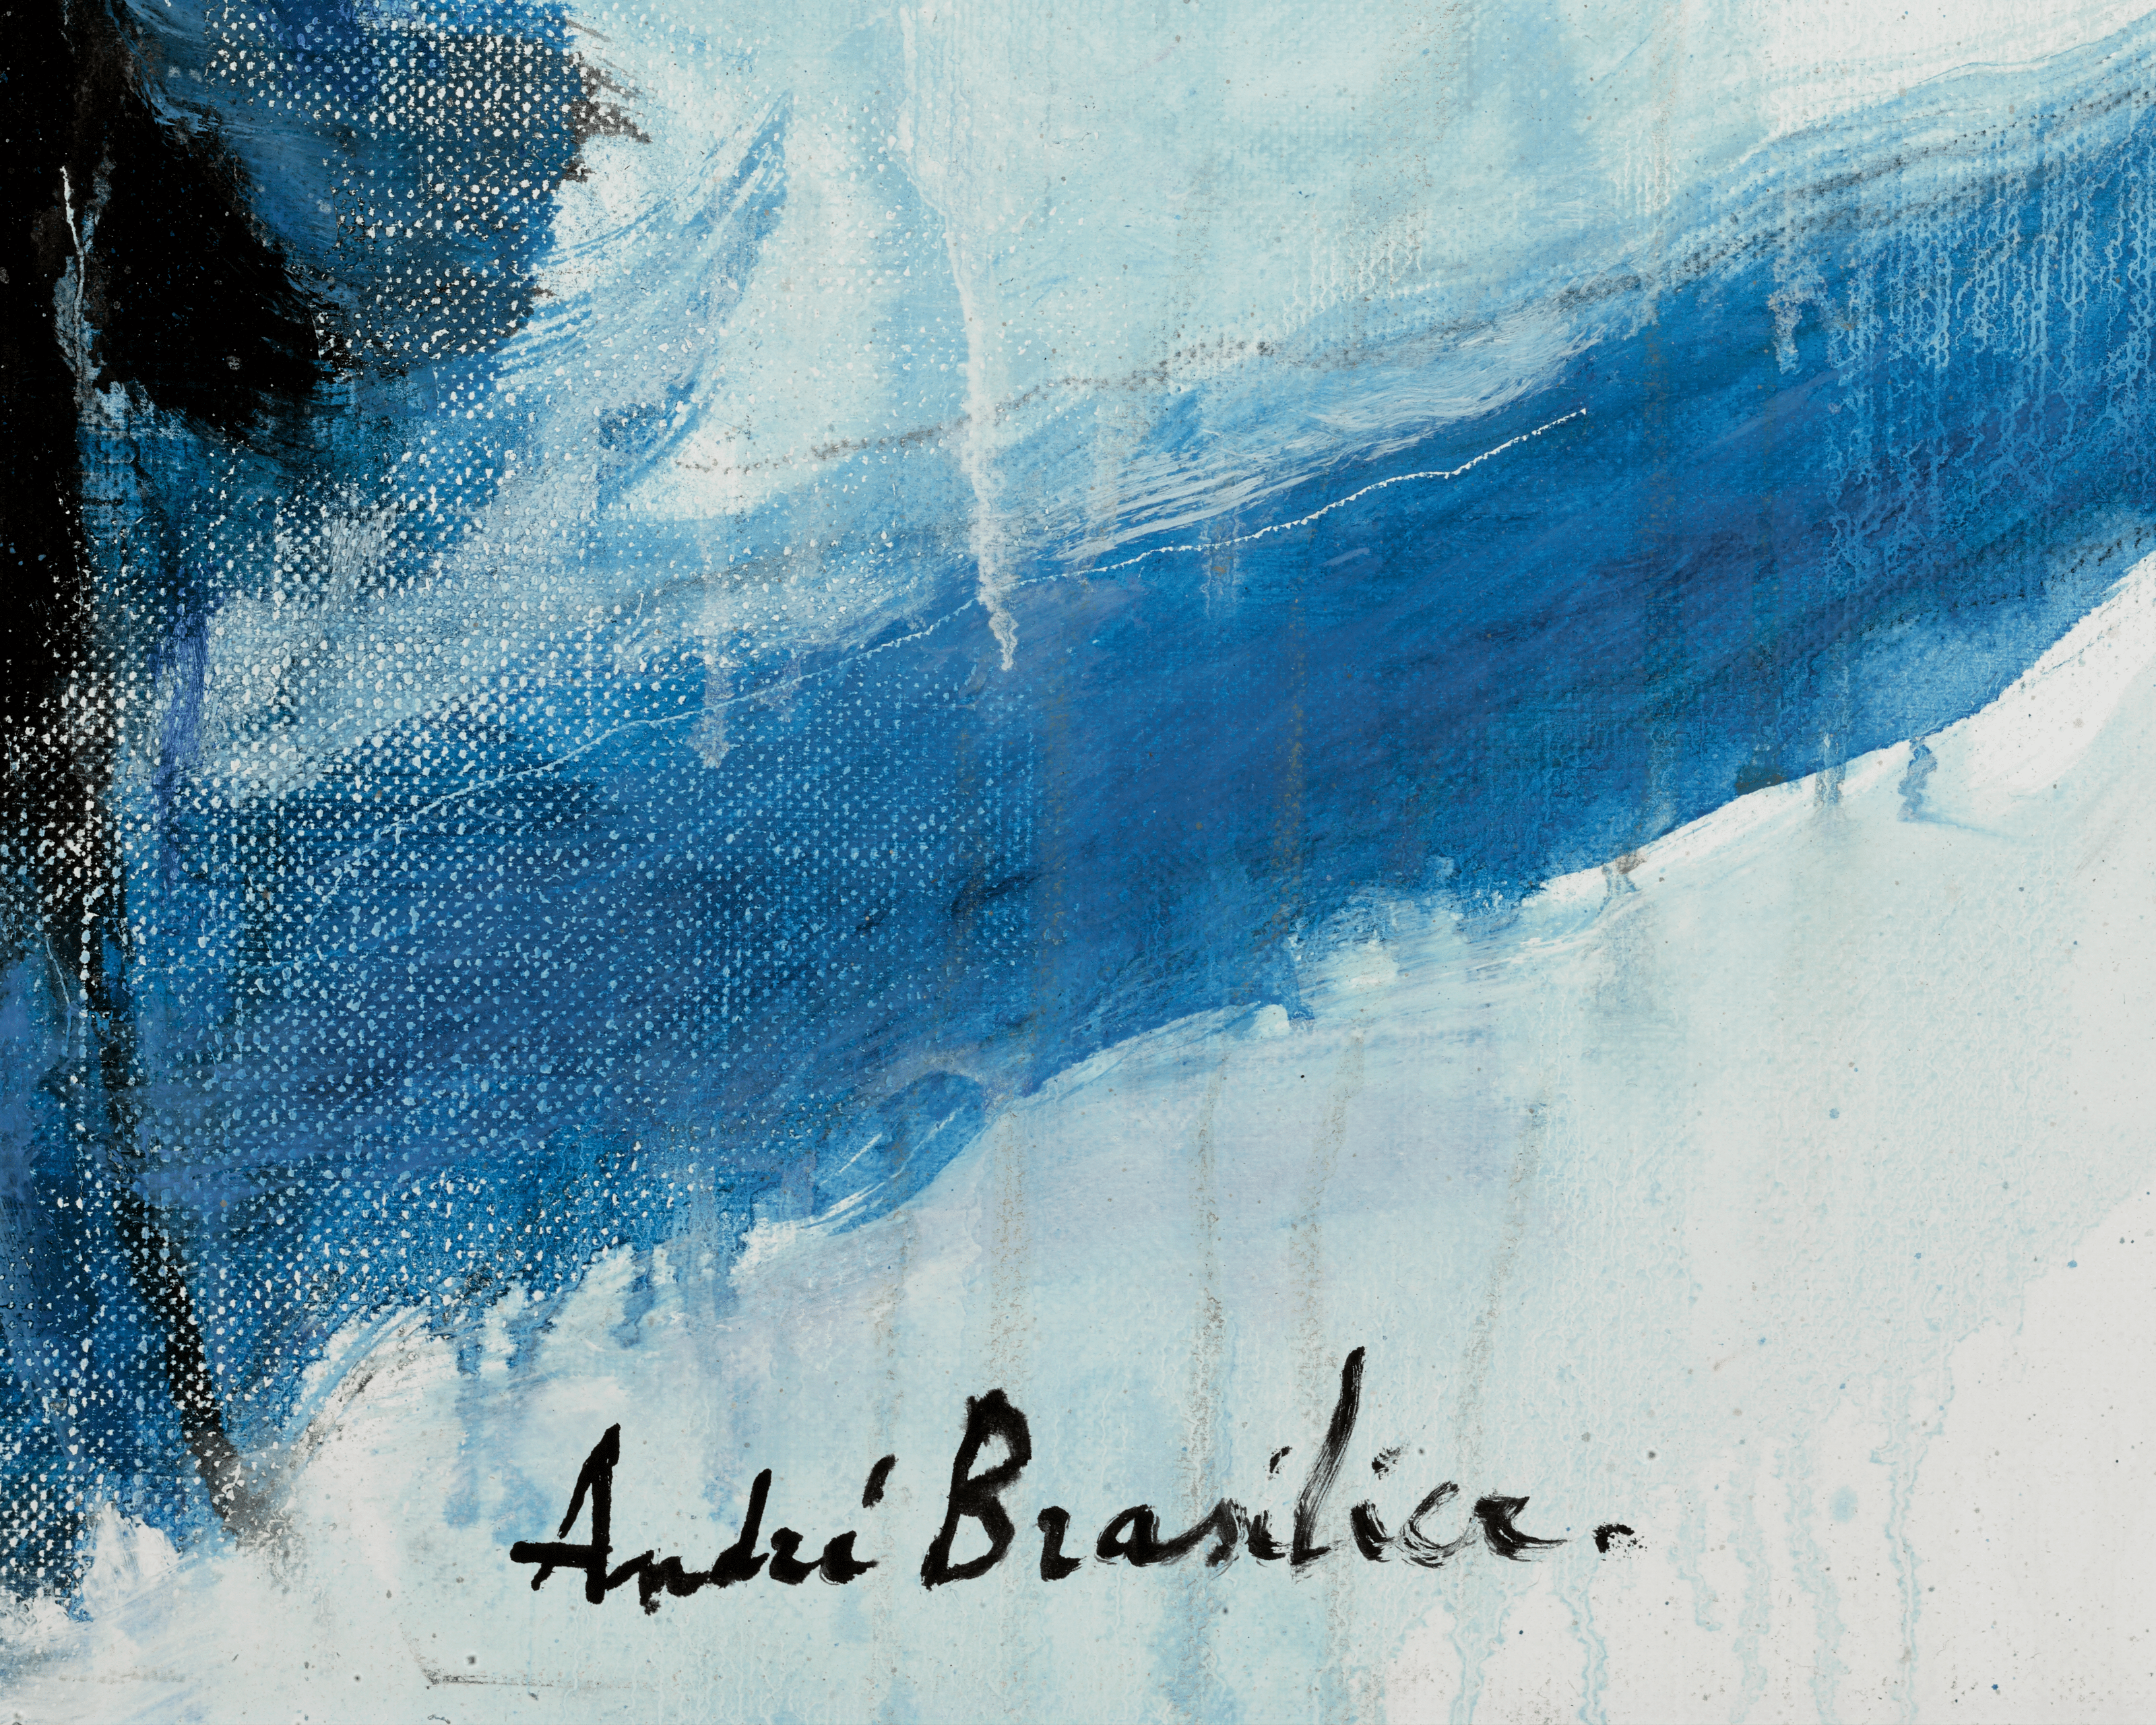 Hiver bleu by André Brasilier